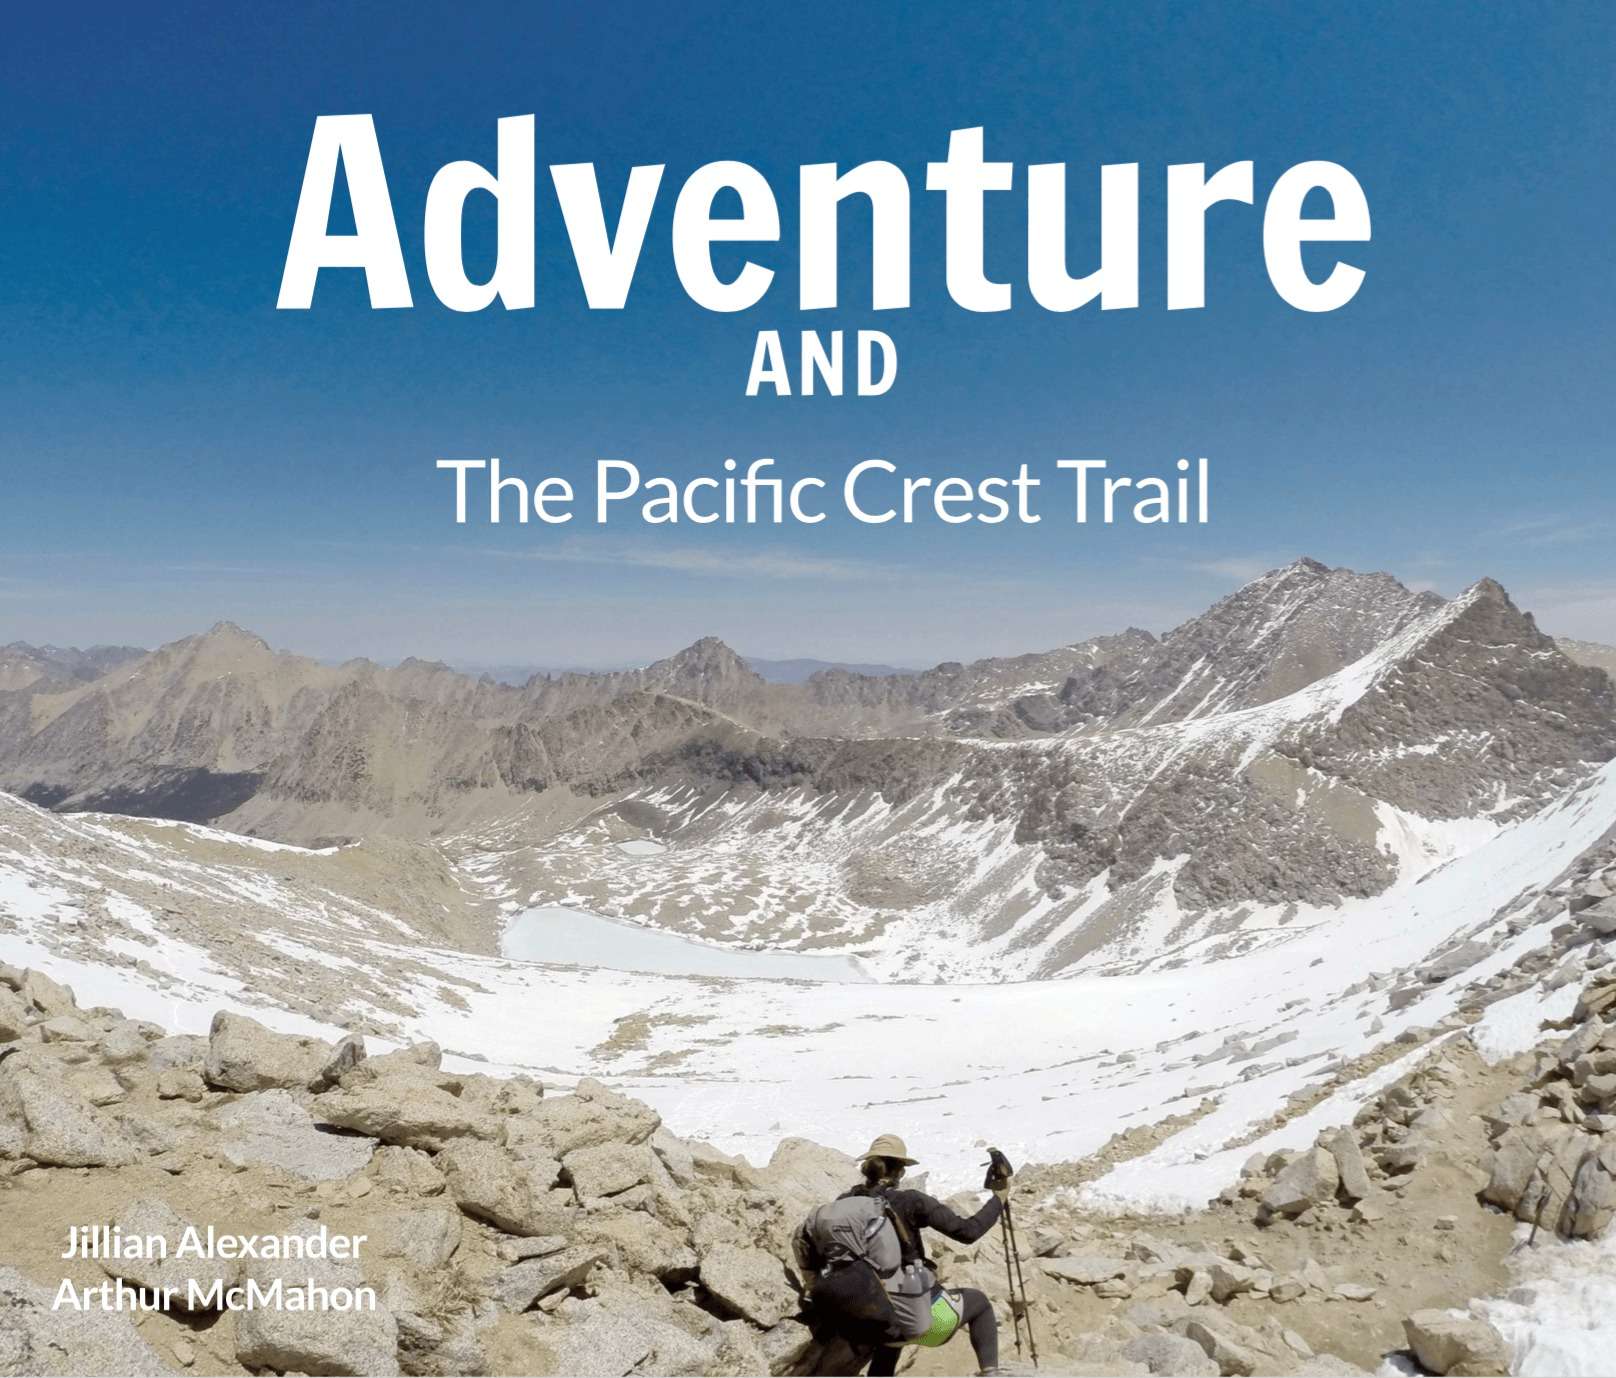 pacific crest trail book wild